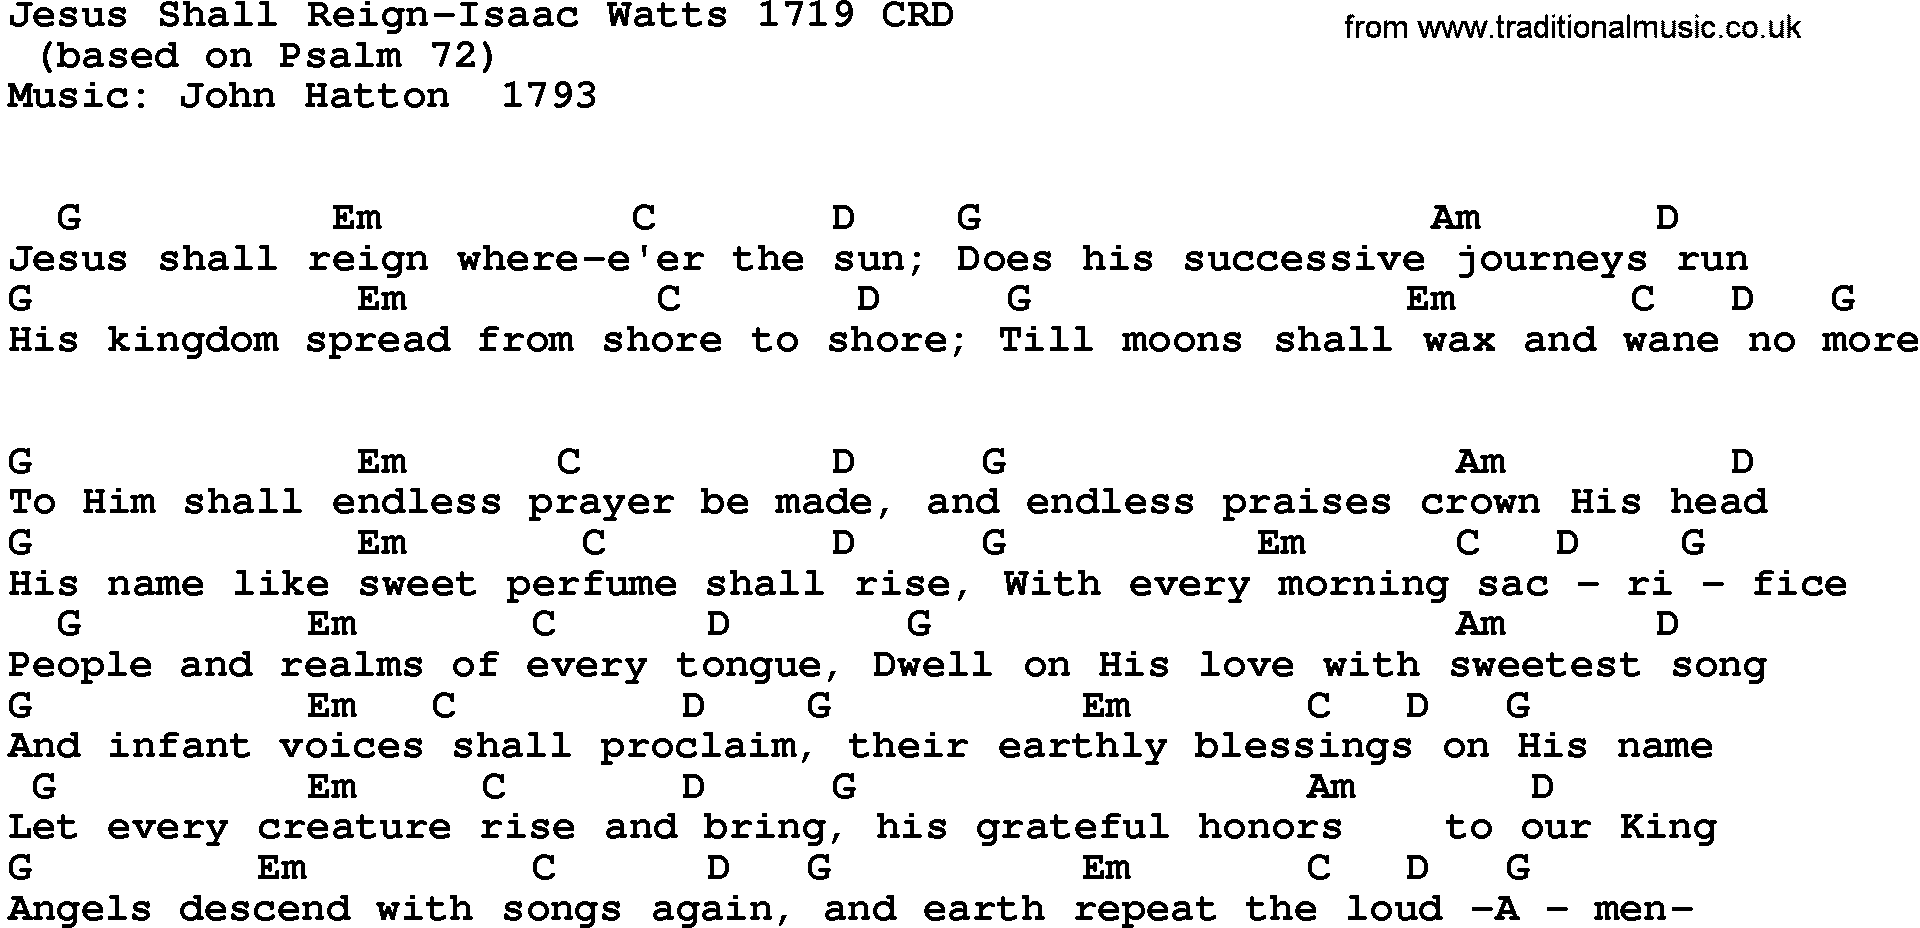 Gospel Song: Jesus Shall Reign-Isaac Watts 1719, lyrics and chords.